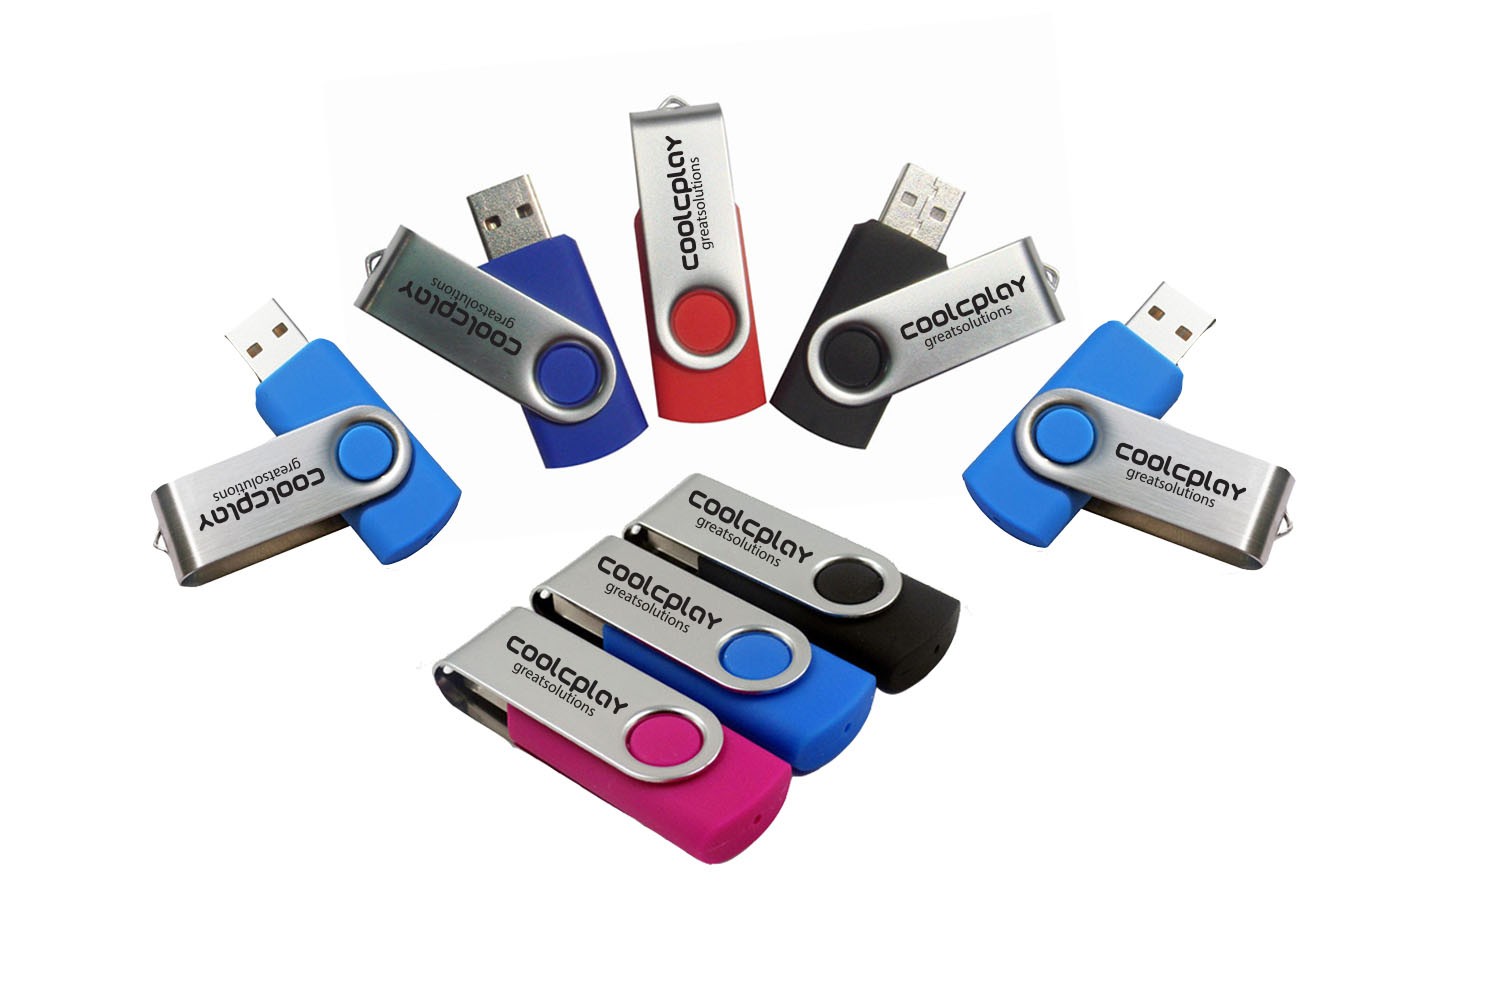 Colorful 4 GB USB Flashdrive With Swivel Cap